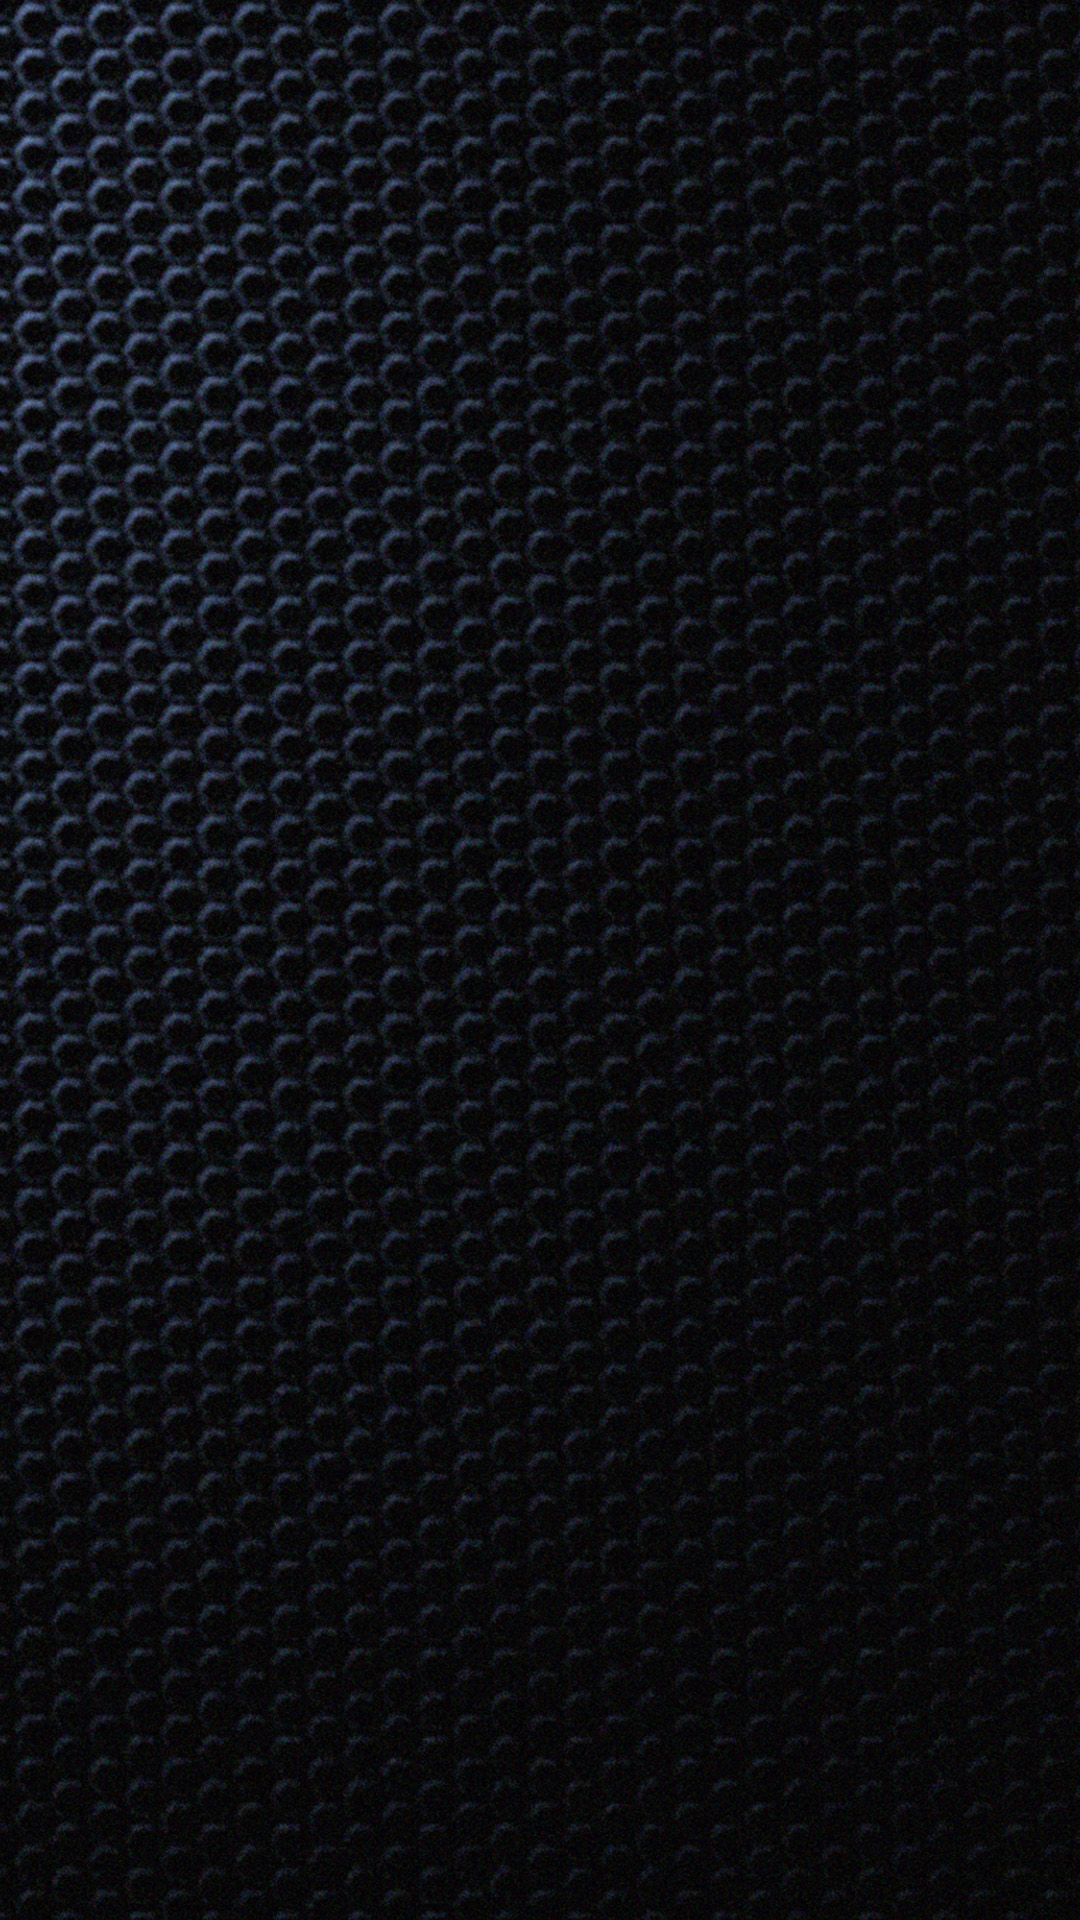 33+] Samsung Galaxy S5 Black Wallpaper - WallpaperSafari